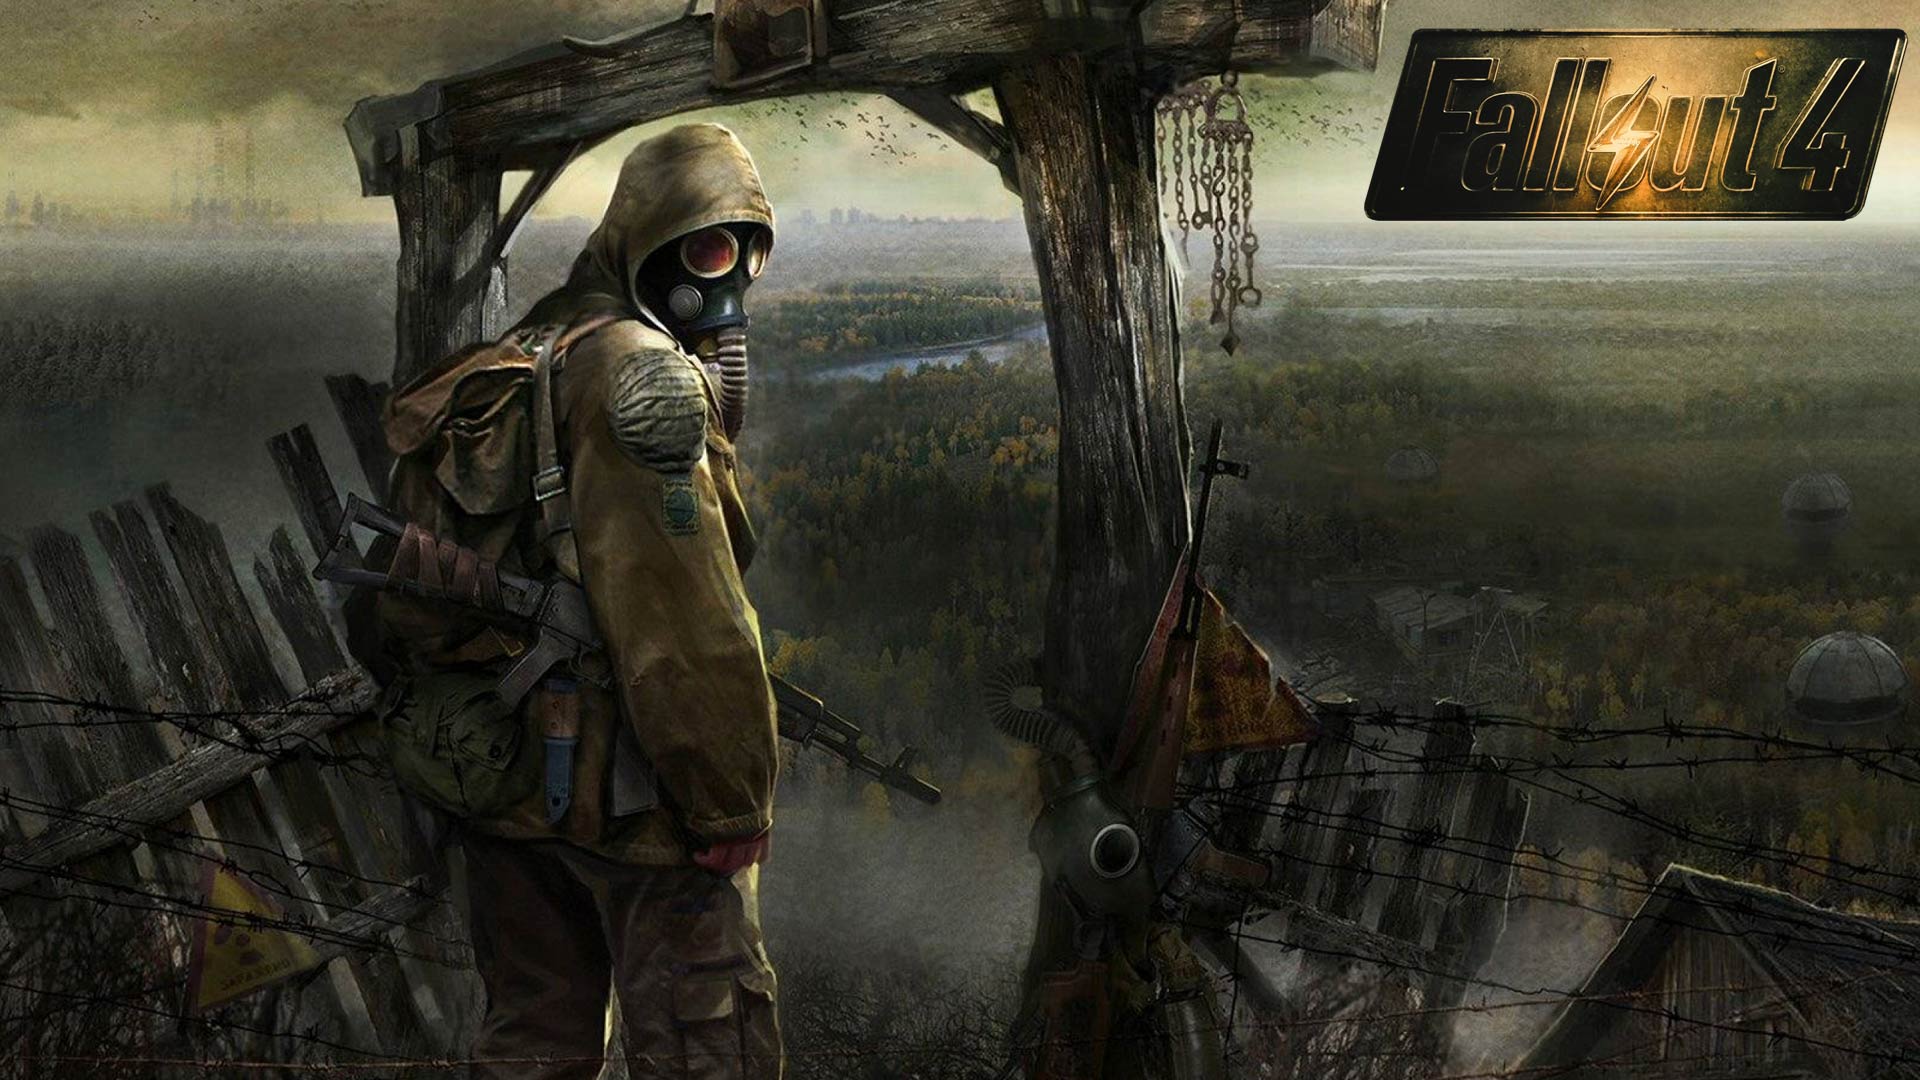 43+] Fallout 4 Animated Wallpaper - WallpaperSafari